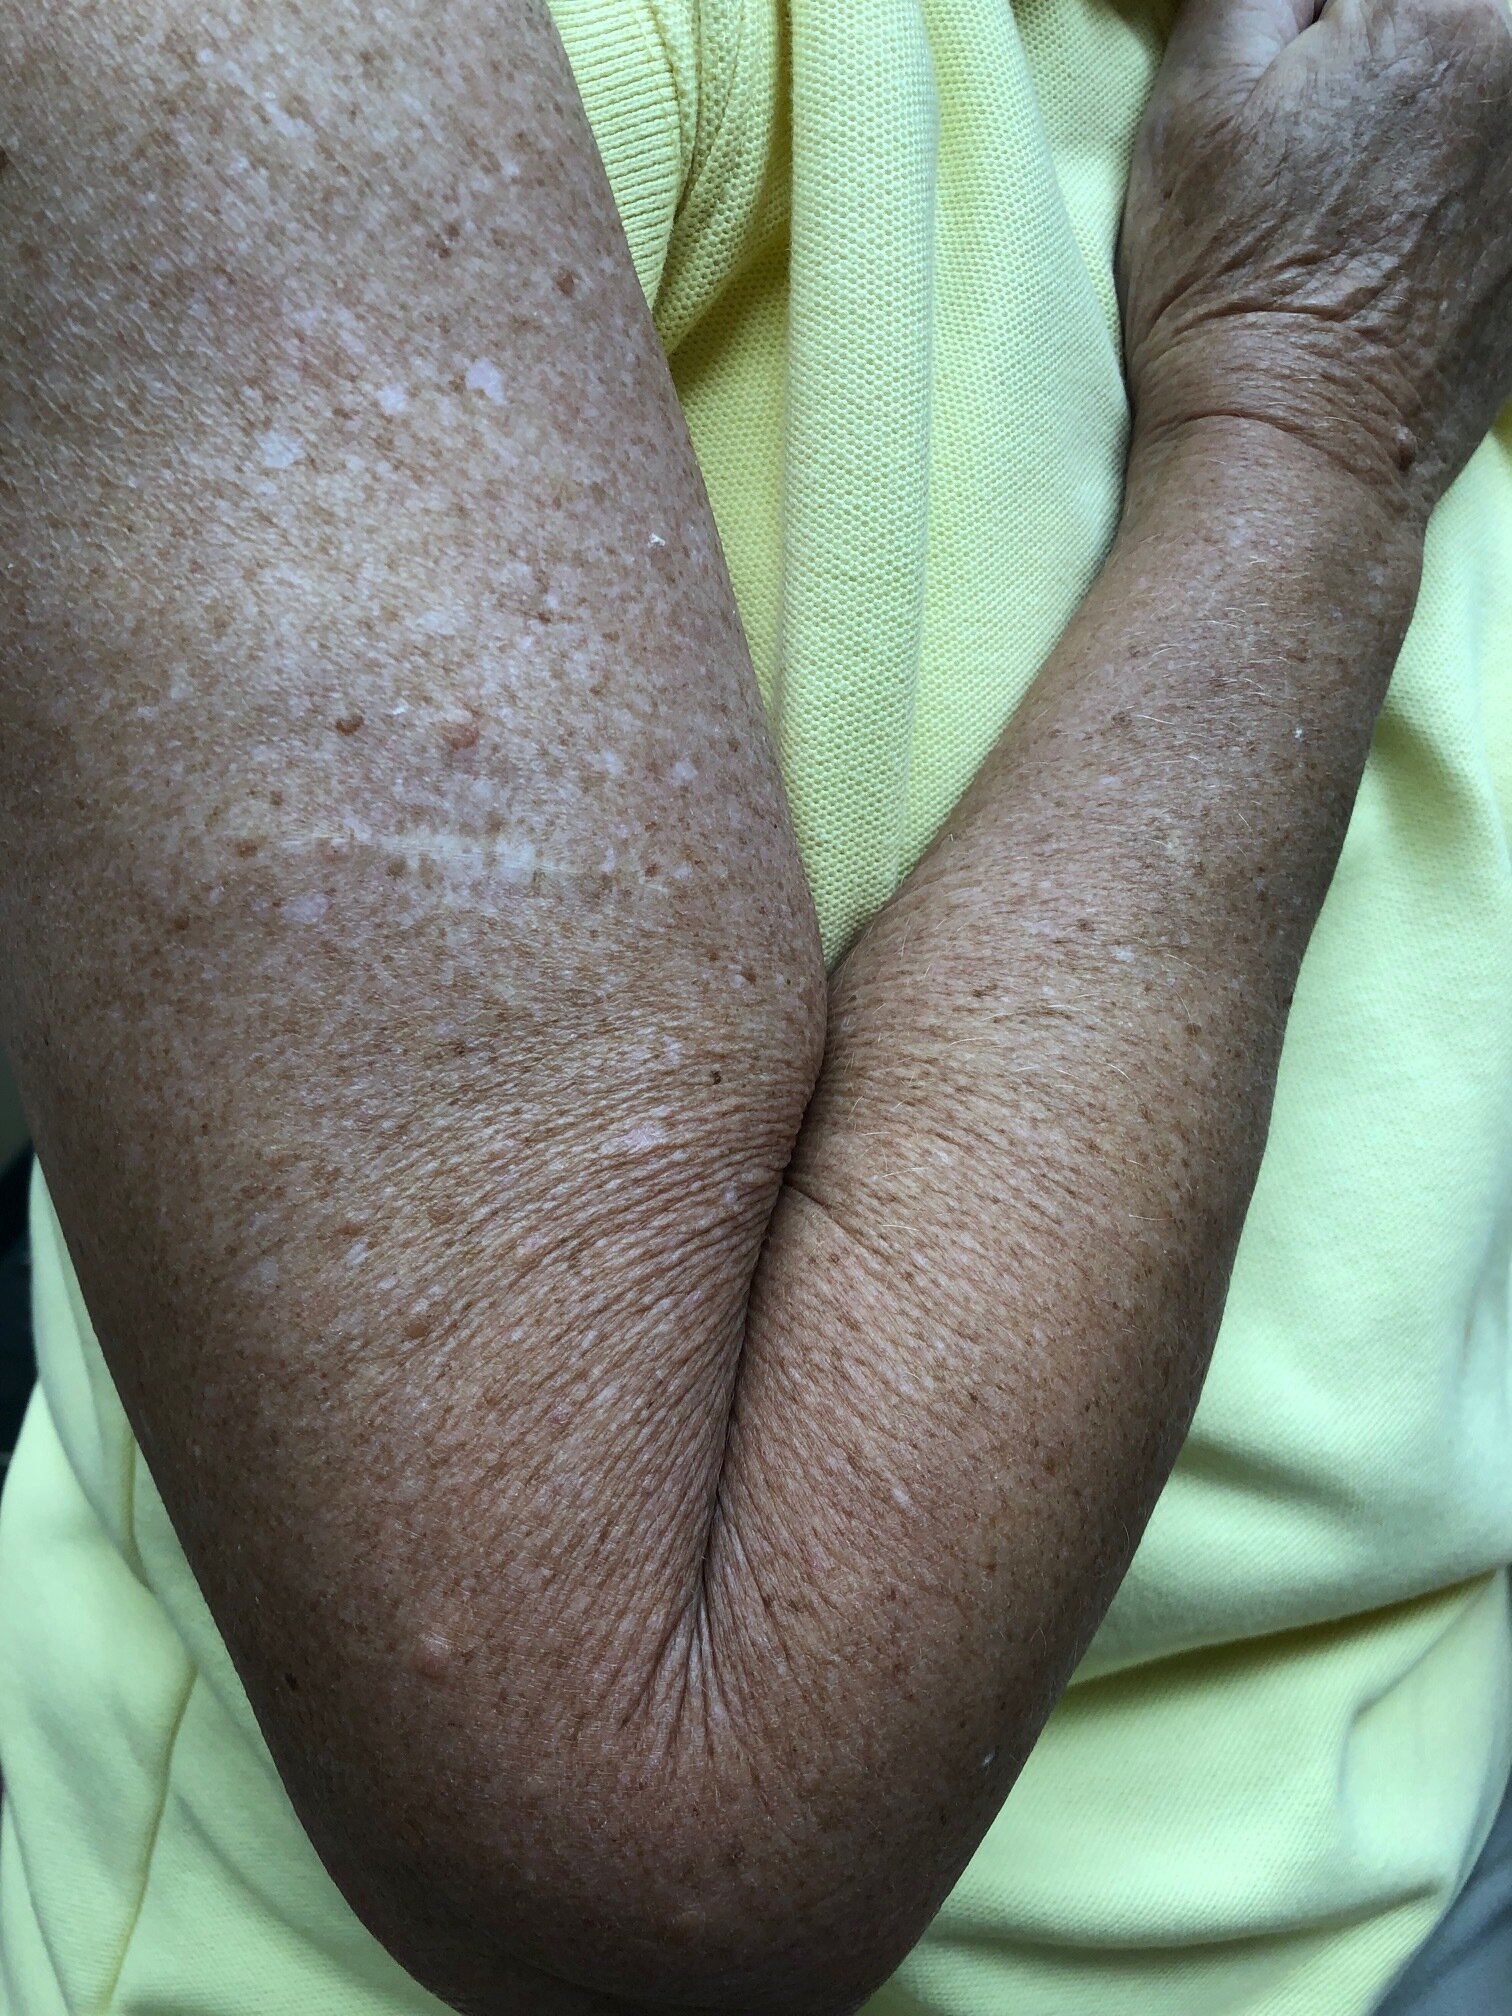 Skin Cancer Scar